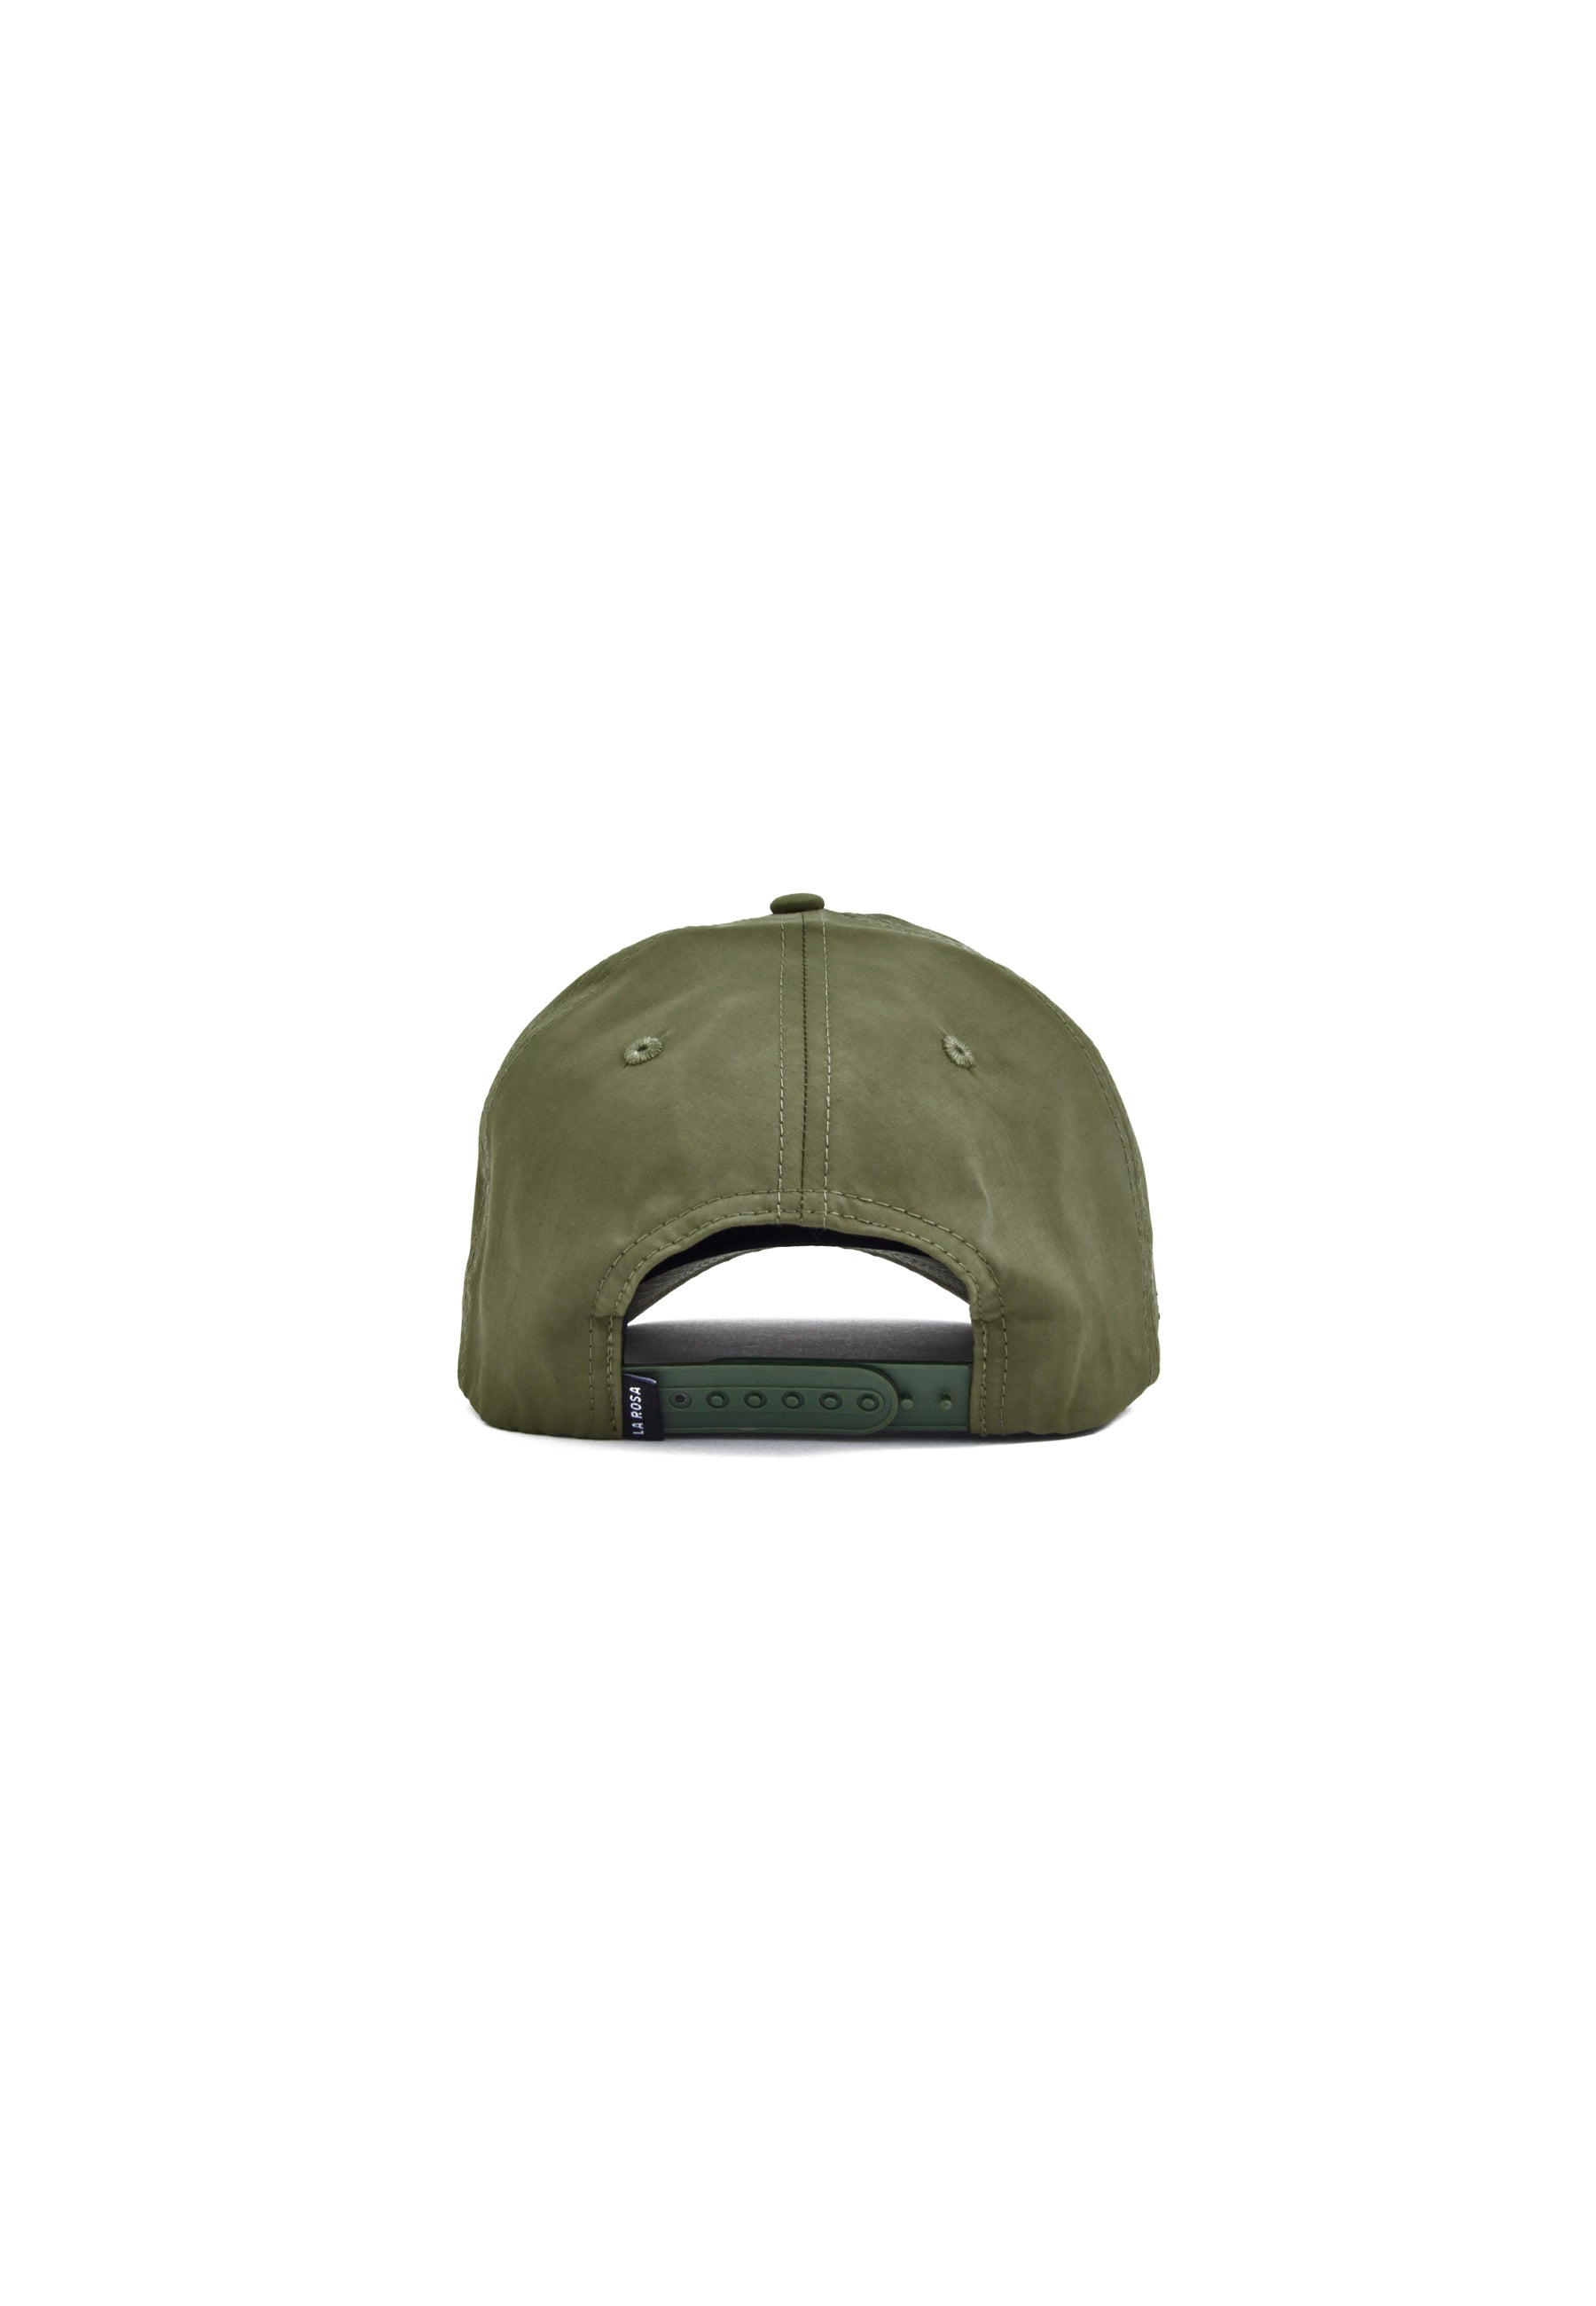 Rose Cap - Army Green